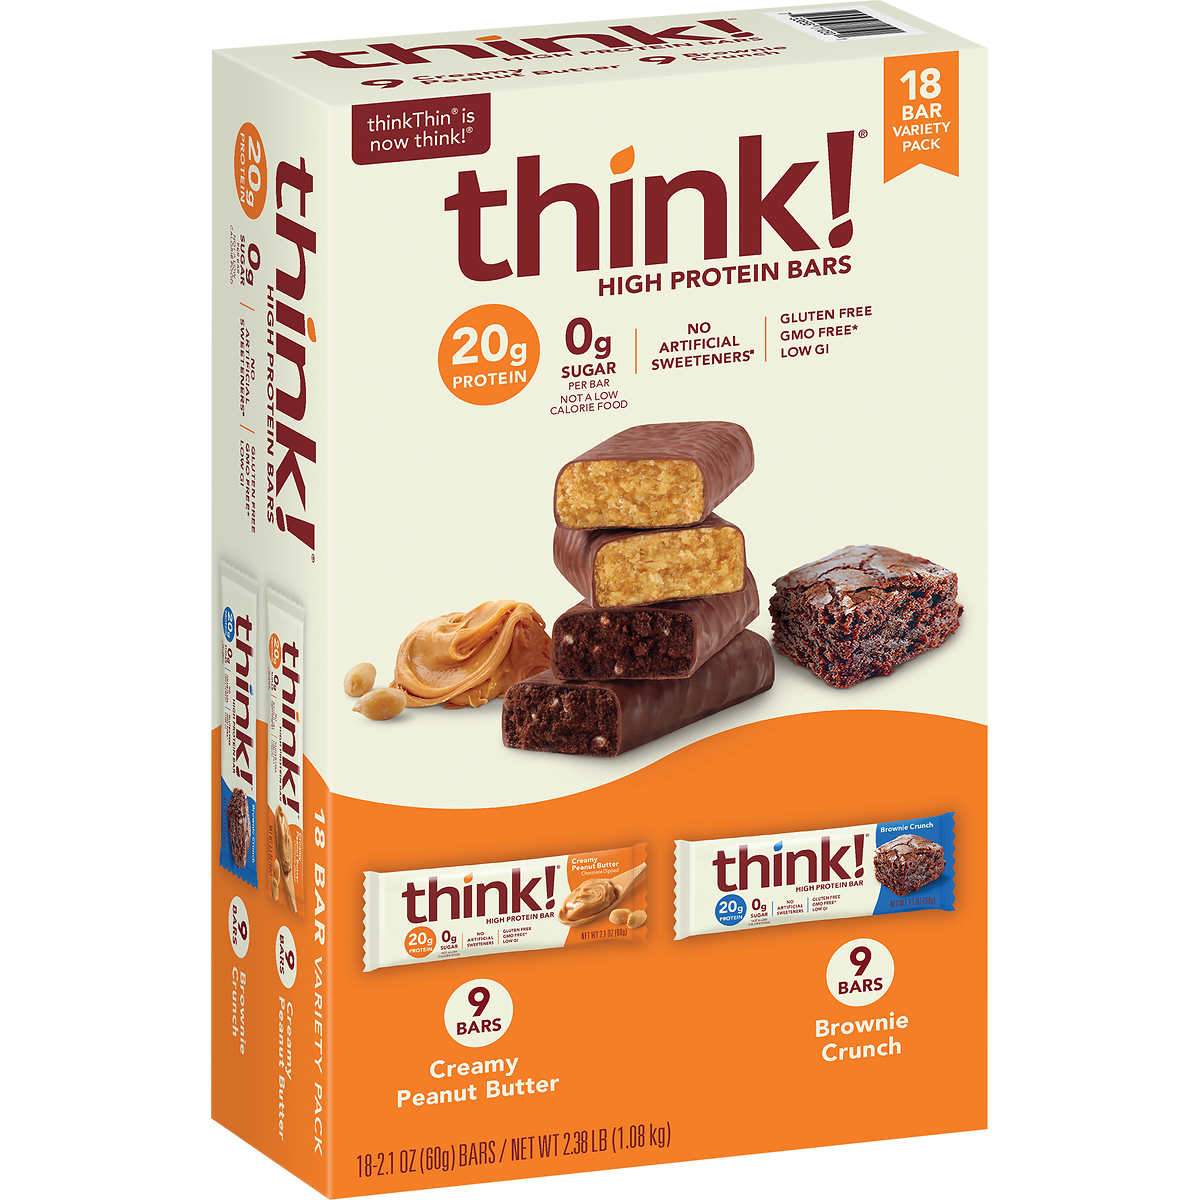 thinkThin High Protein Bars Meltable thinkThin Variety 2.1 Oz-18 Count (Creamy Peanut Butter & Brownie Crunch) 